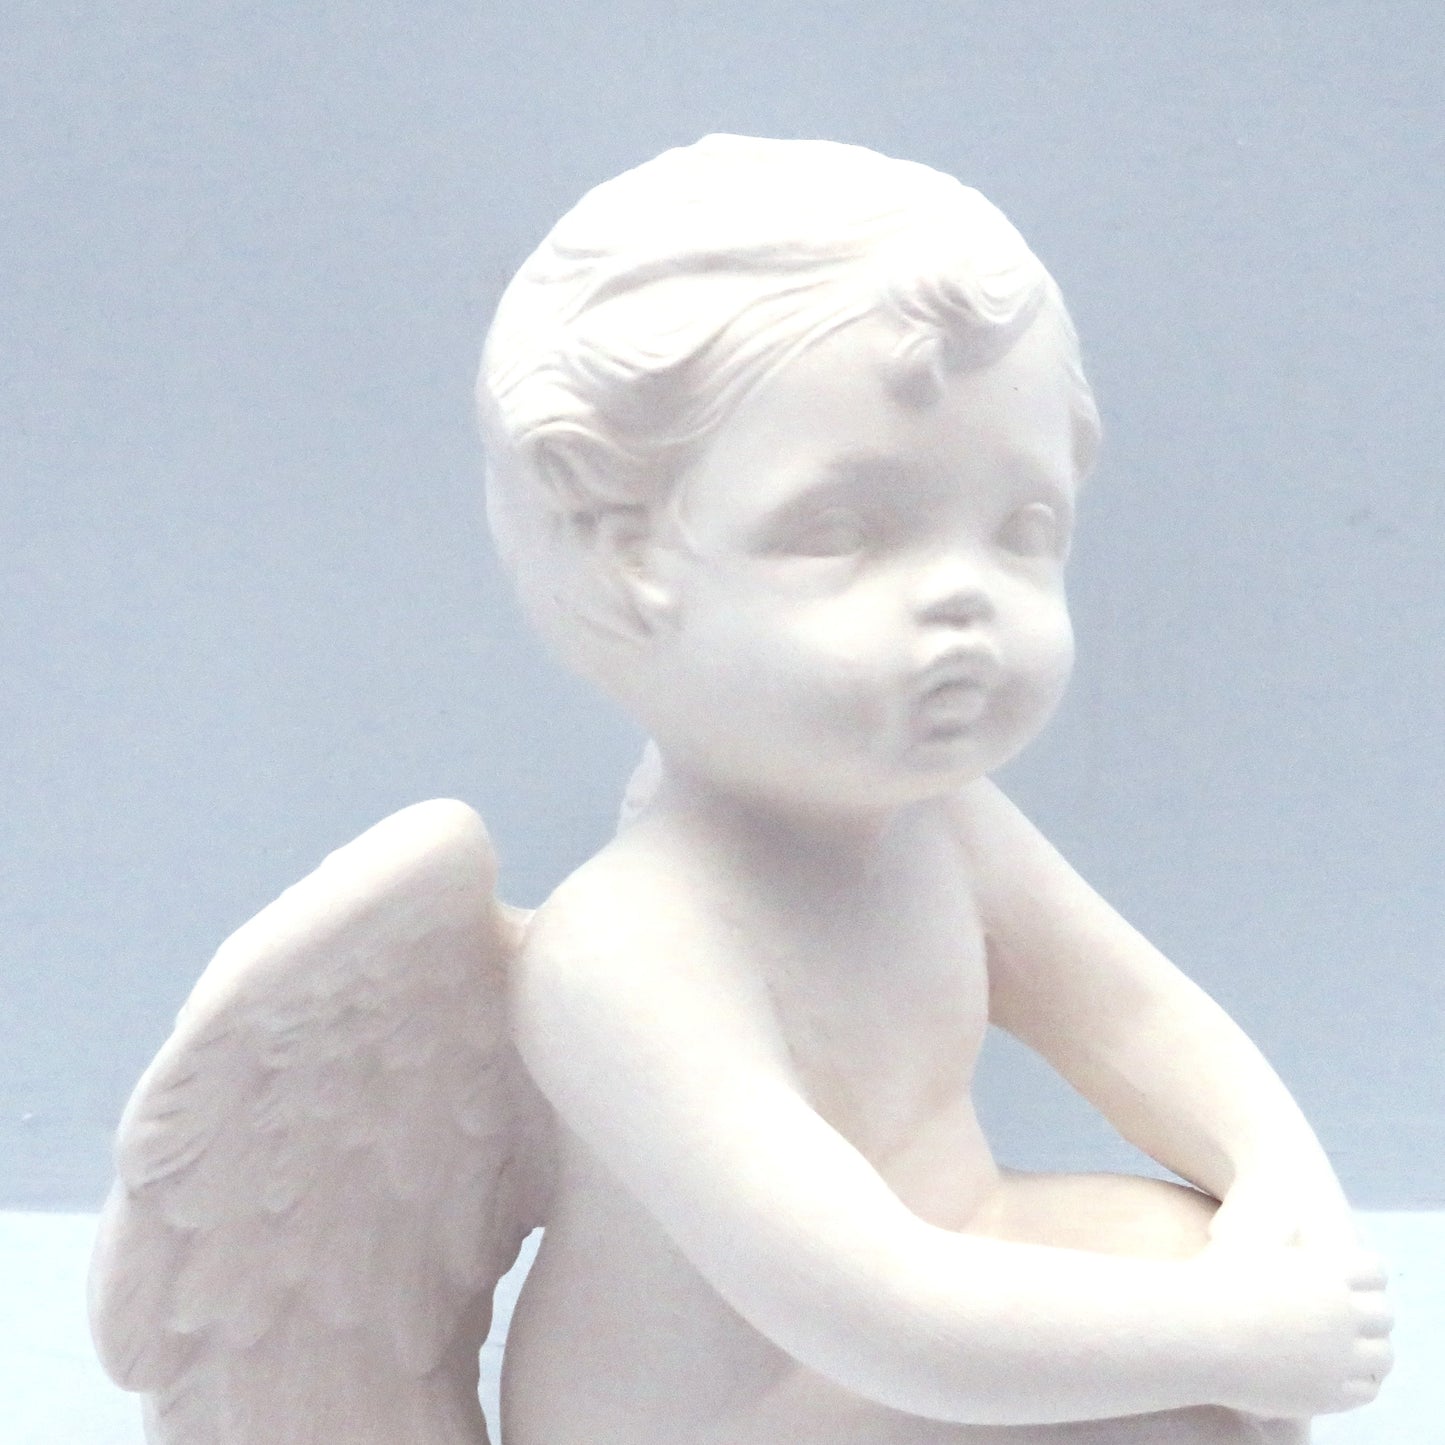 Large Handmade Ready to Paint Ceramic Cherub Angel Figurine / Paintable Ceramic Angel Statue / Angel Decor / Angel Gift / Ceramics to Paint